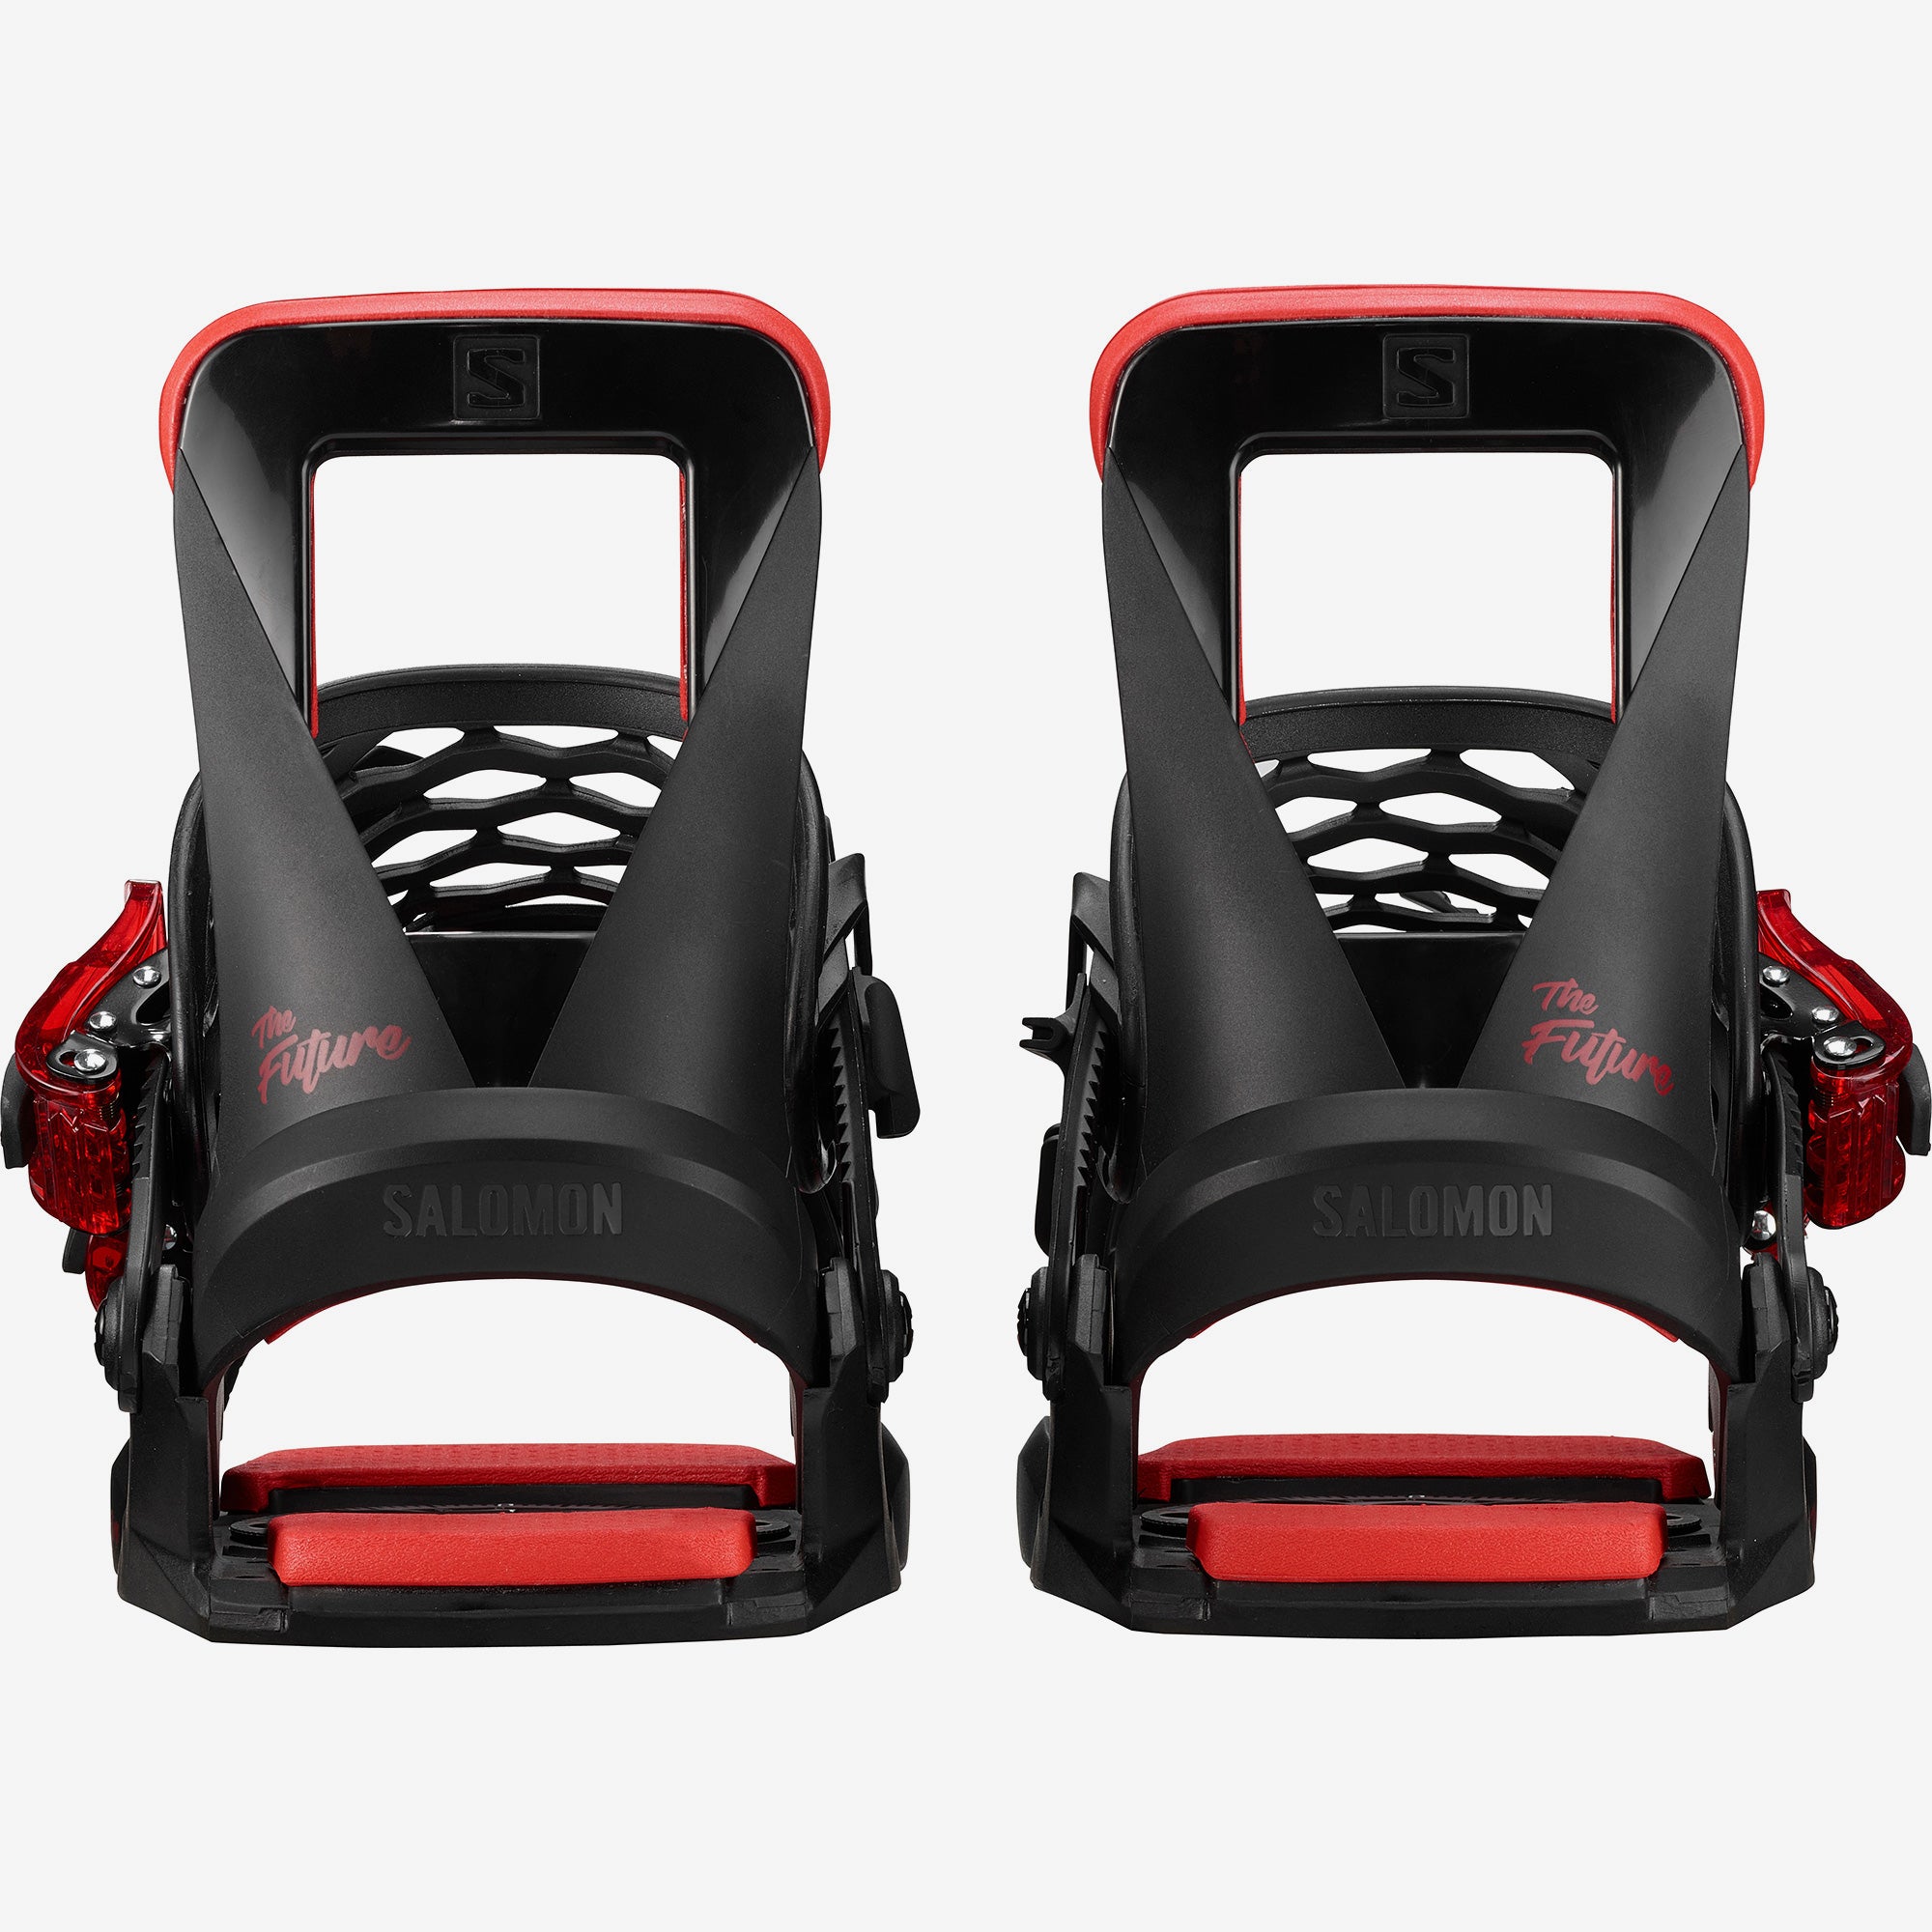 Salomon The Future - Black/Red - Jr Snowboard Binding